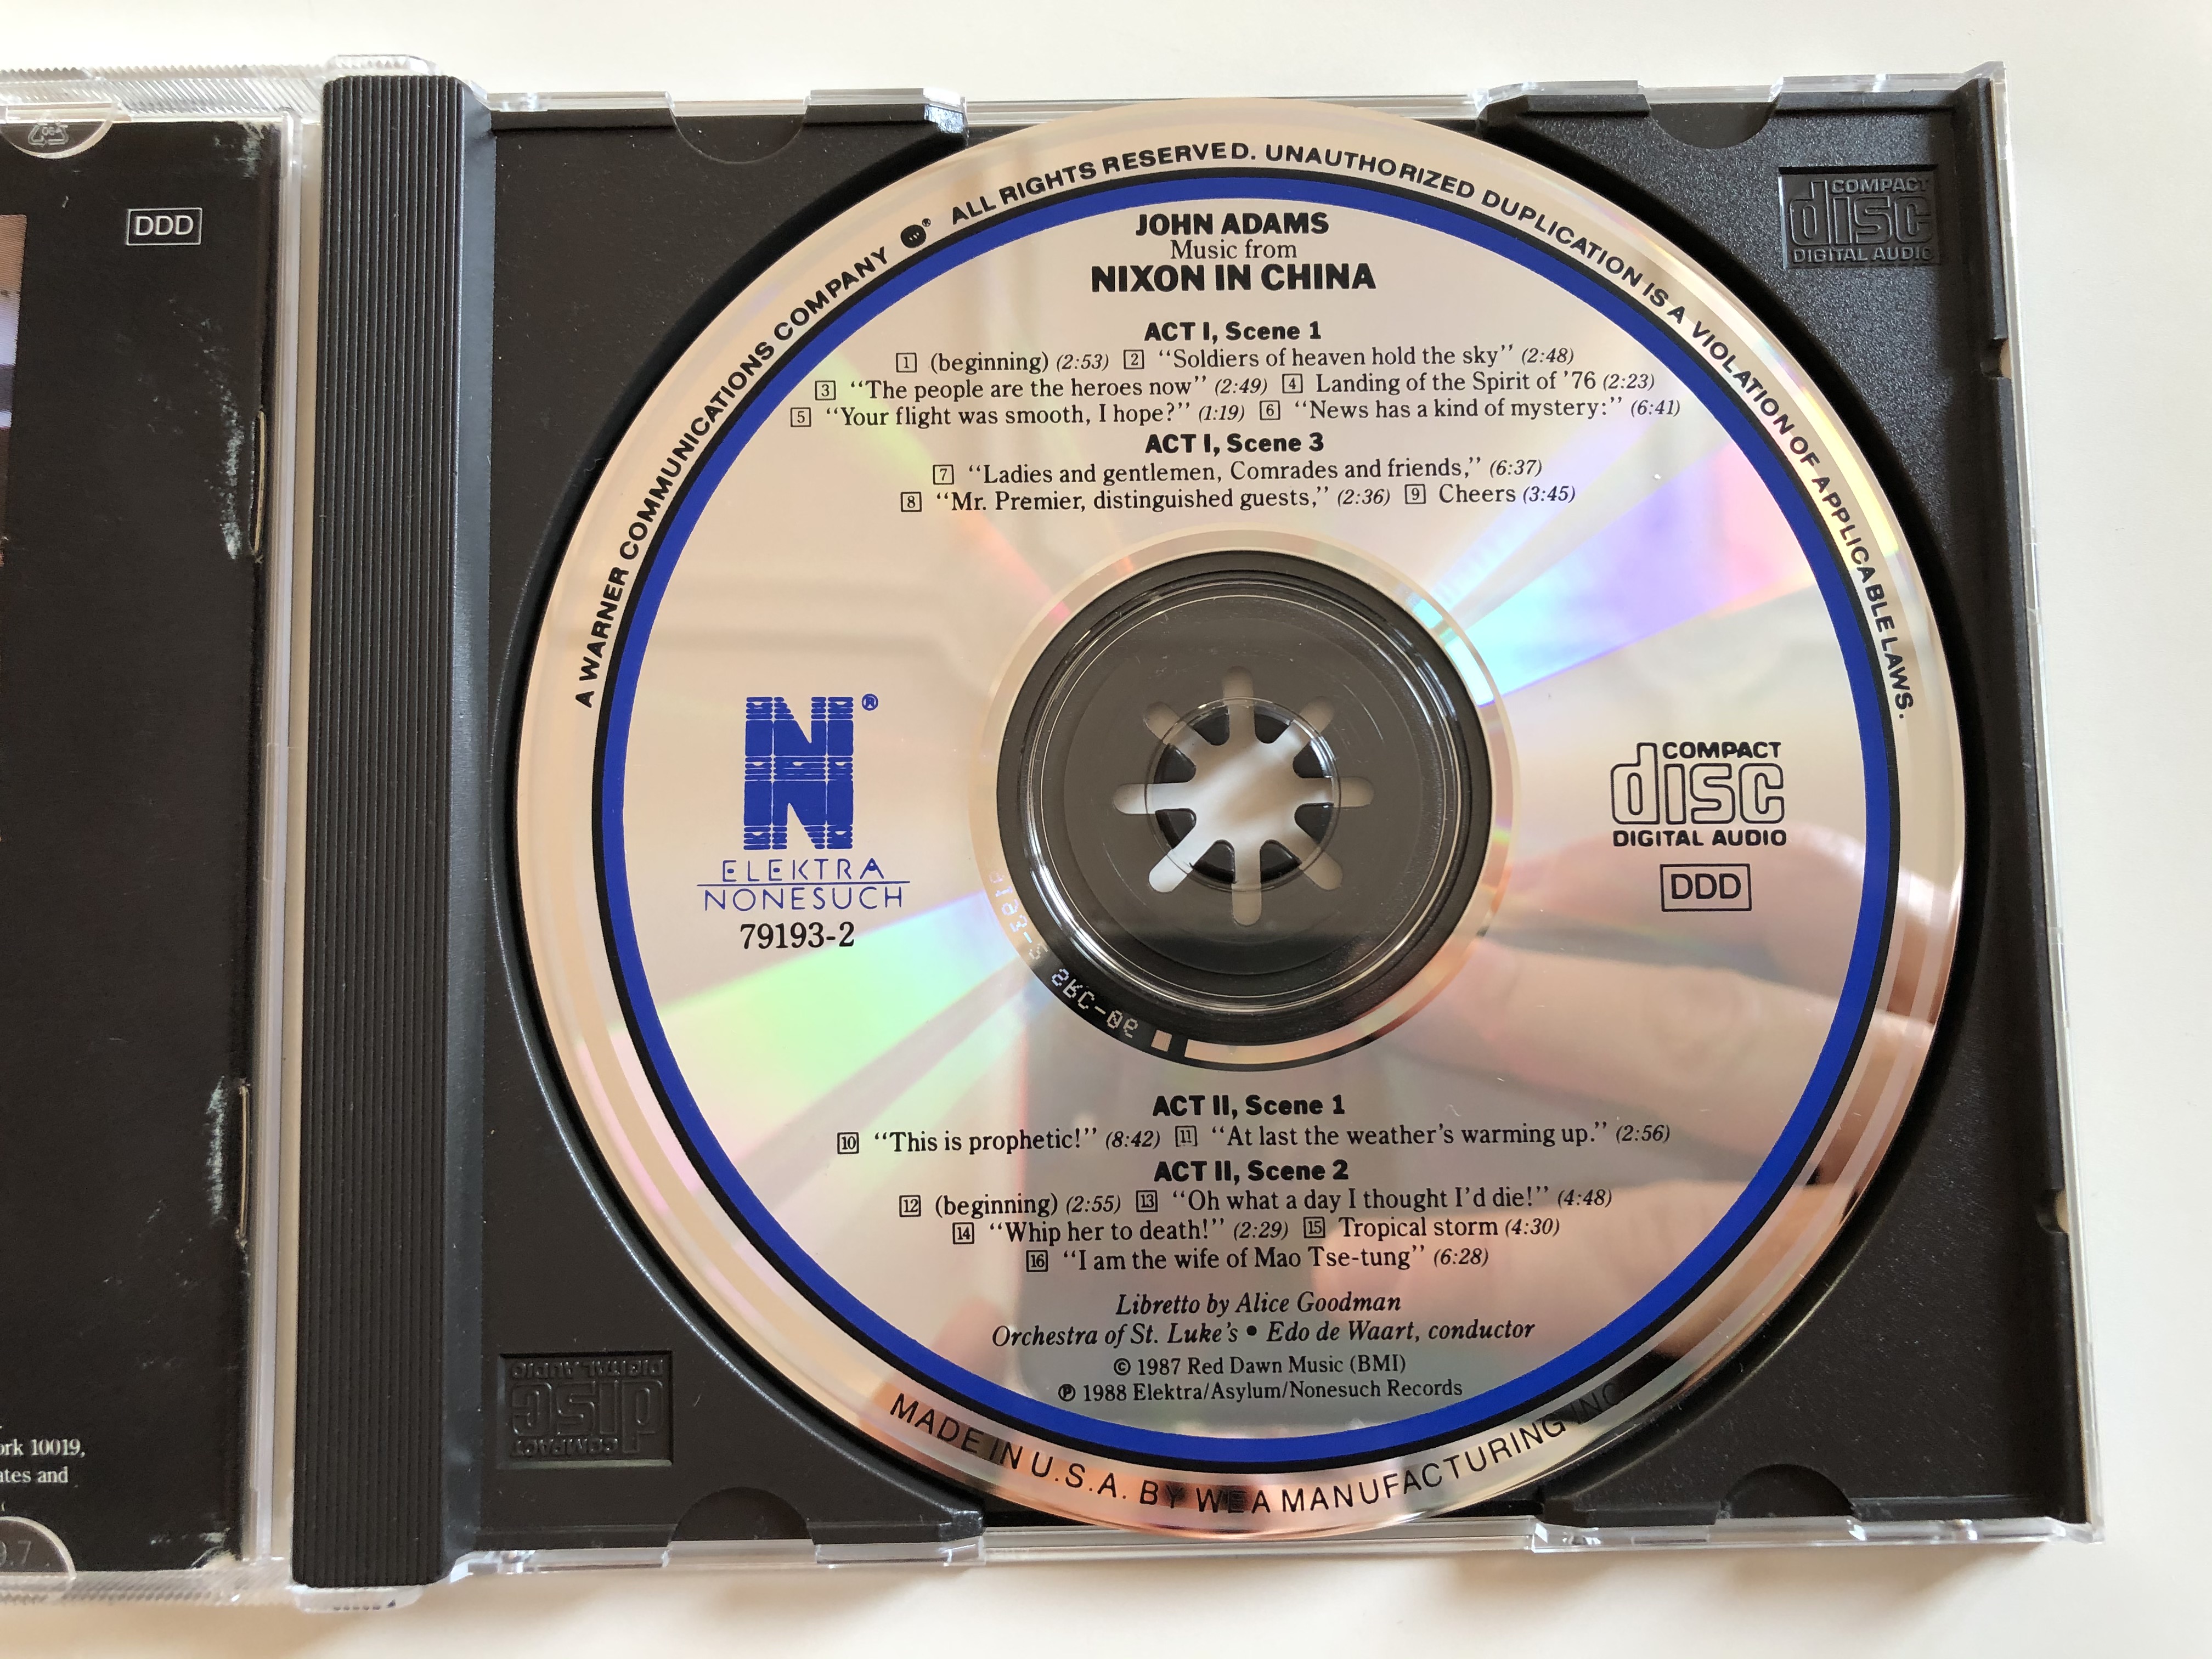 john-adams-music-from-nixon-in-china-libretto-by-alice-goodman-orchestra-of-st.-luke-s-conductor-edo-de-waart-elektra-nonesuch-audio-cd-1988-79193-2-13-.jpg